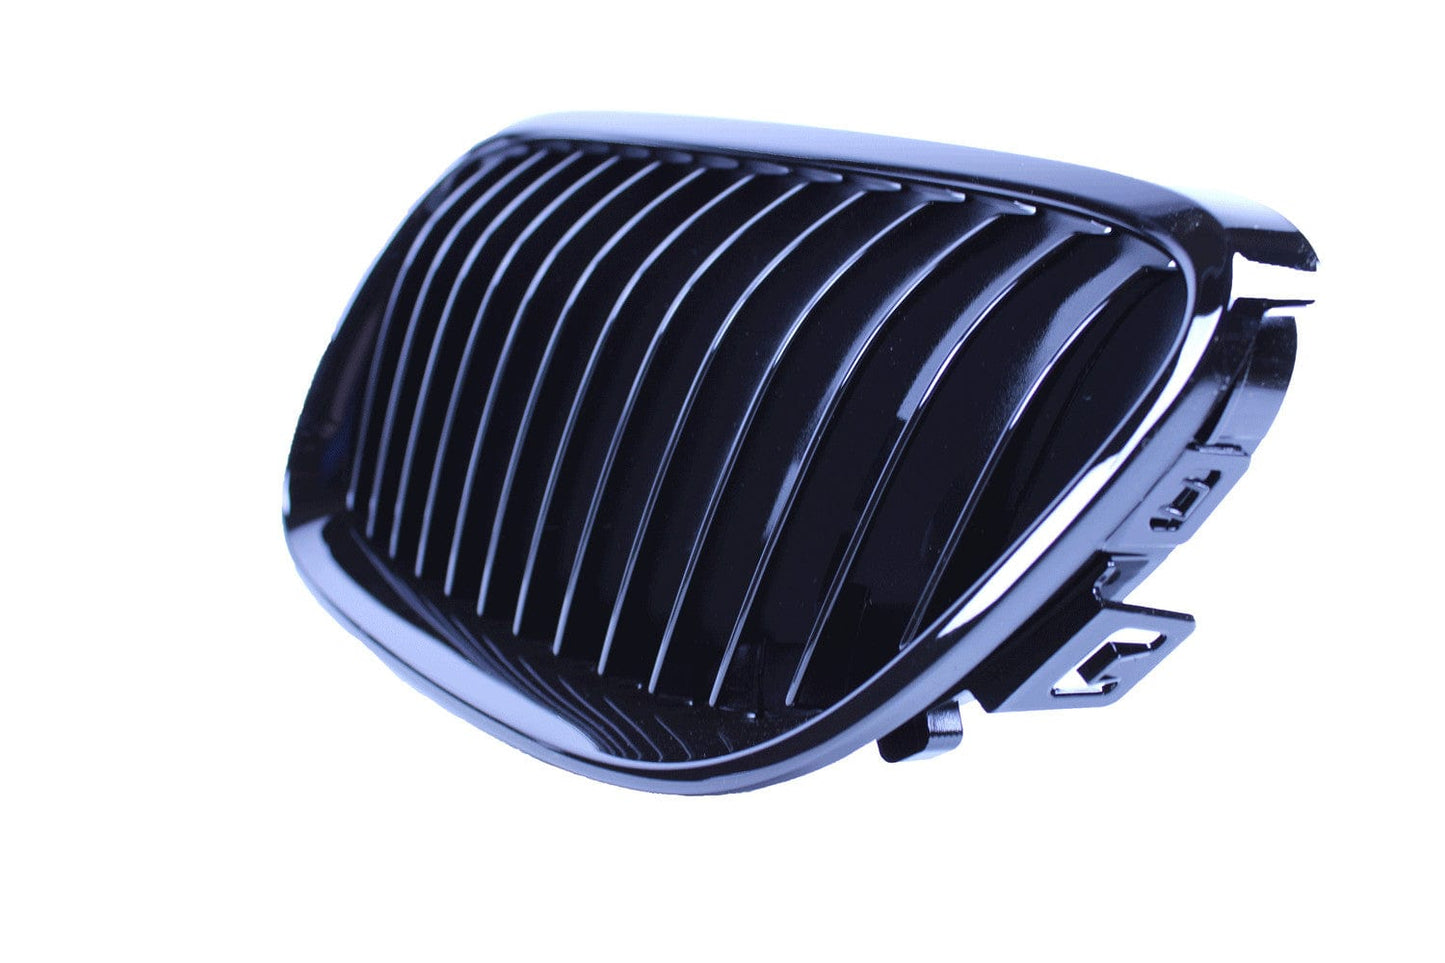 Grill kidneys compatible with BMW 3 series coupe/convertible E92 - E93 LCI gloss black single bars